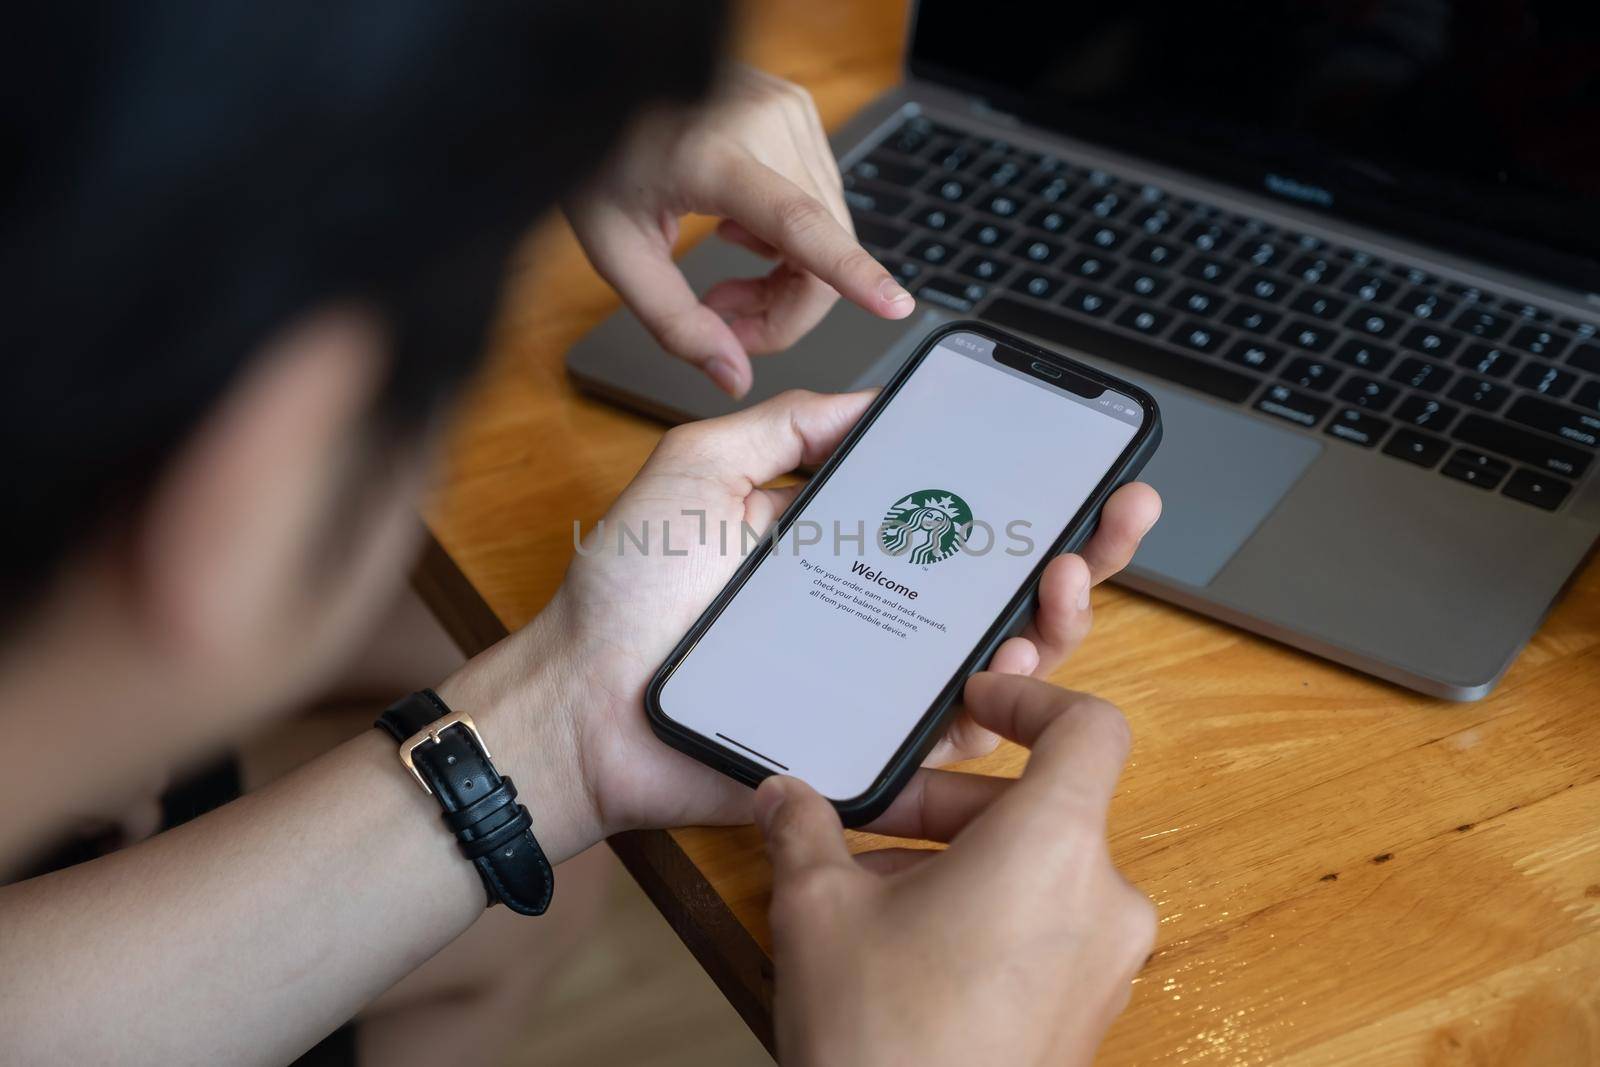 CHIANG MAI, THAILAND - JAN 23, 2021 : Starbucks app on the Apple iPhone display screen. opening online menu page of Starbucks website, Starbucks coffee shop by nateemee